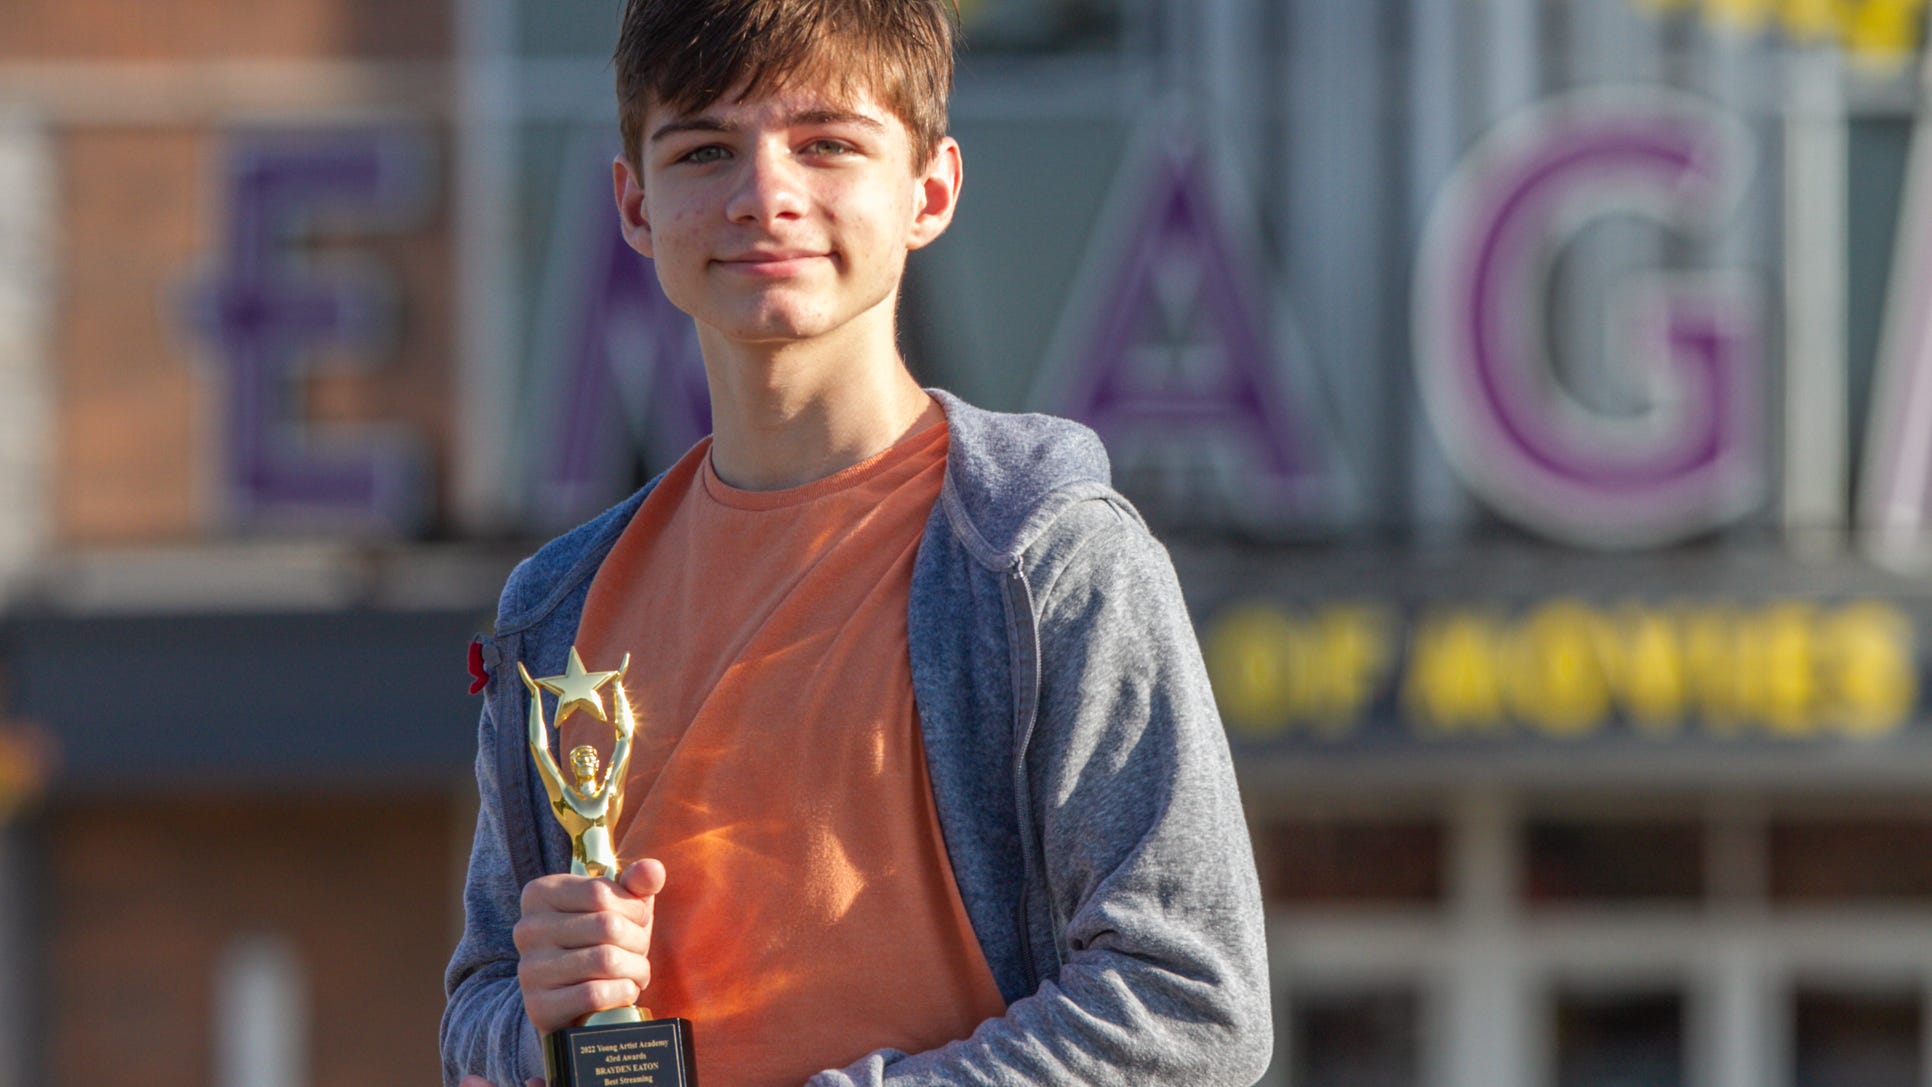 Hartland's Brayden Eaton wins 'kiddie' Oscar for streaming movie role